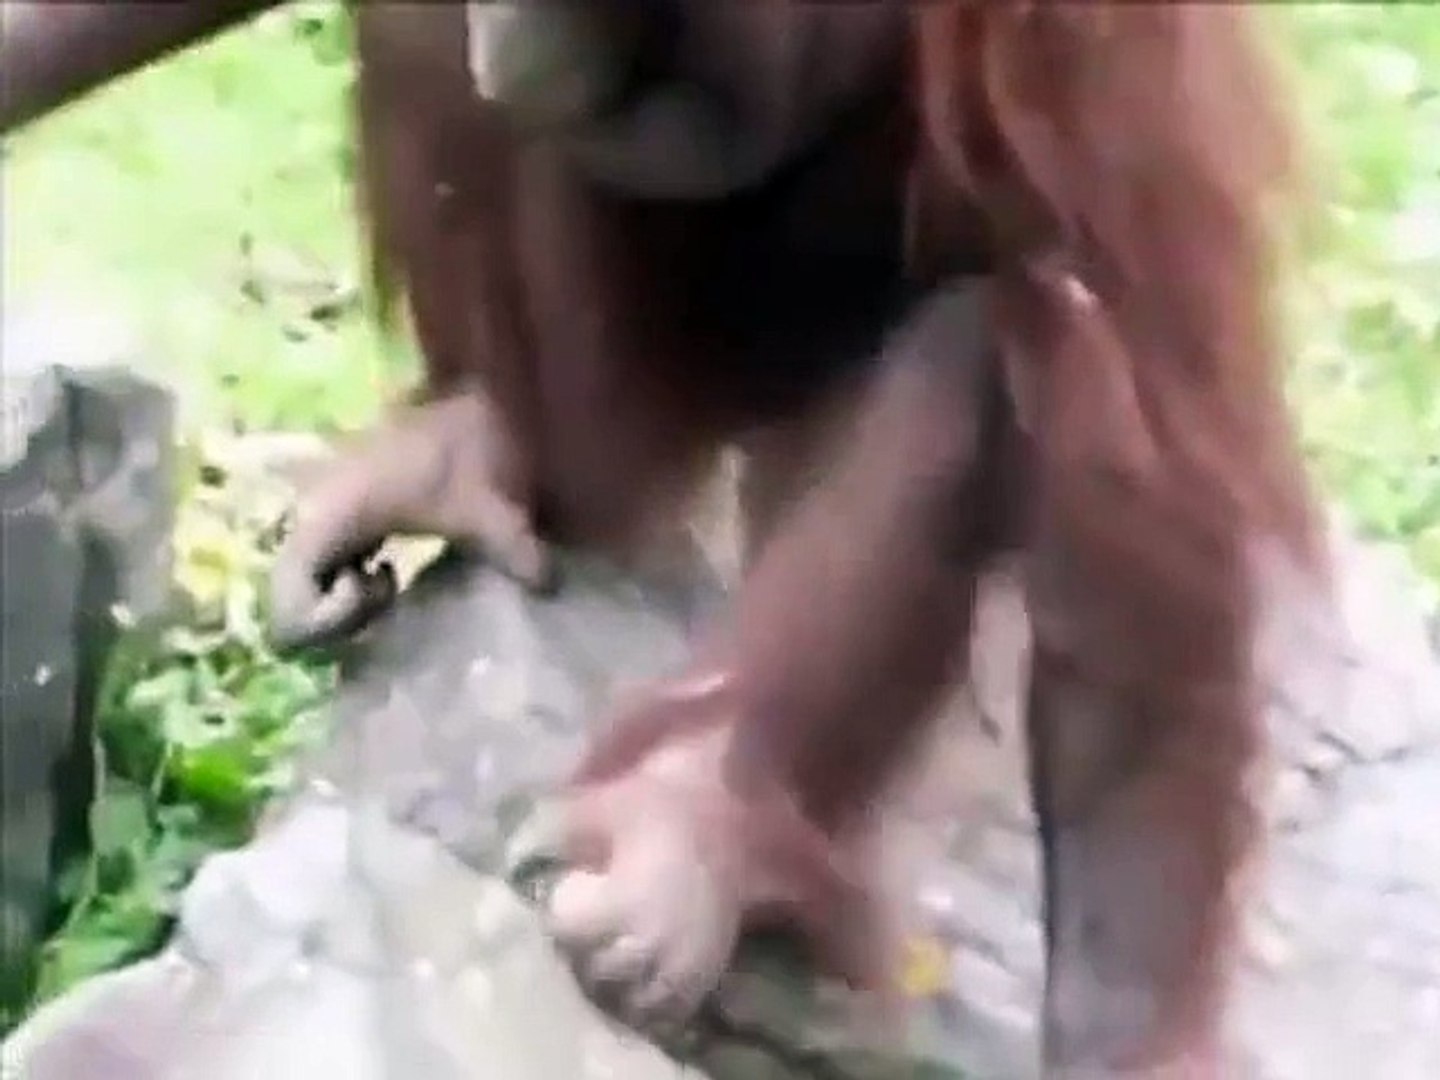 Orangutan saves chick from drowning!